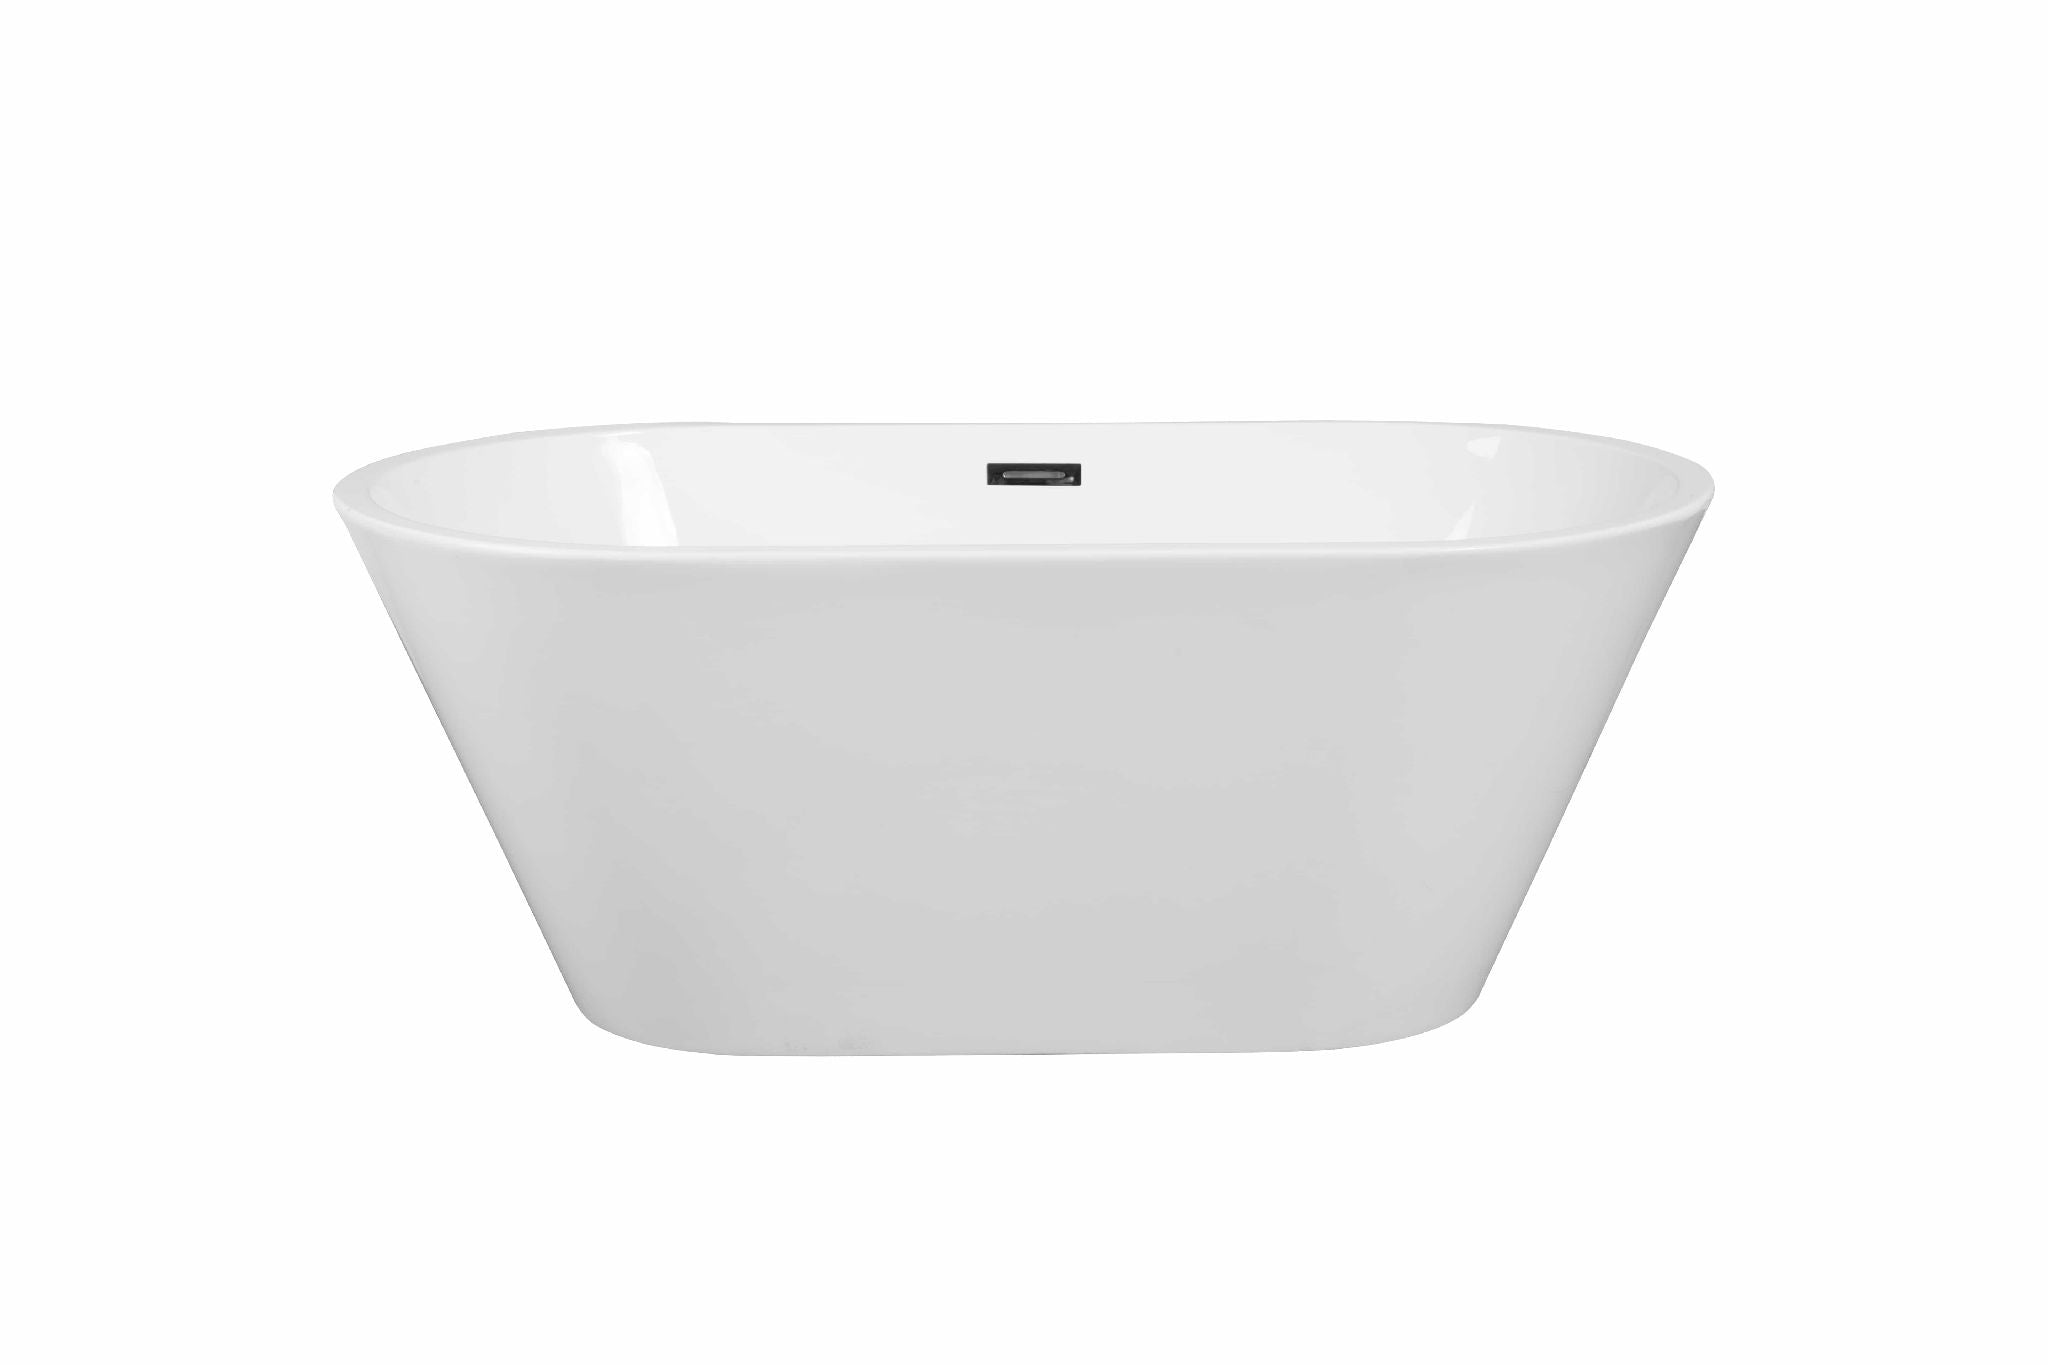 SkySea Bath Tub 59 White Acrylic Free Standing Soaker, Center Drain And Overflow